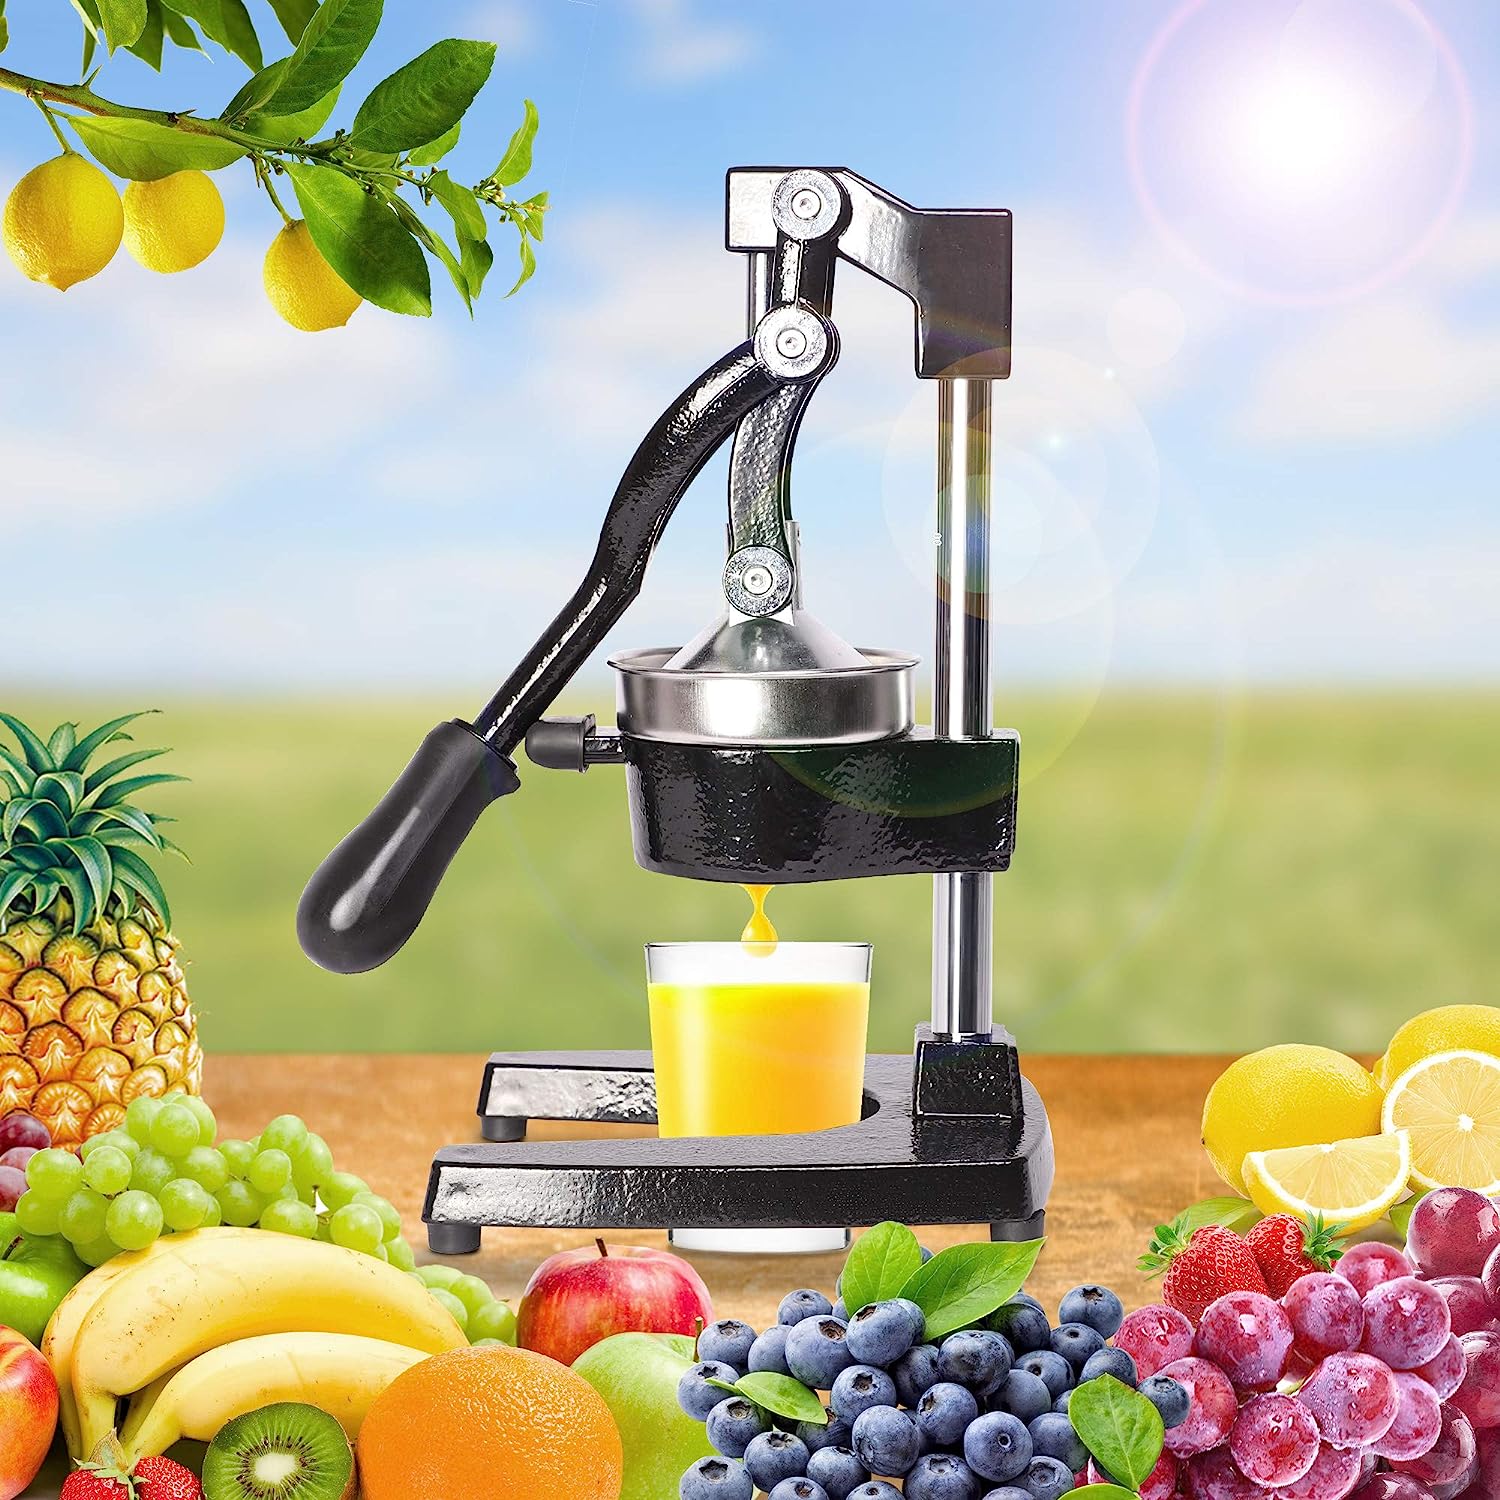 Manual Citrus Juicers, Professional Hand Press Orange Lemon Citrus Squeezer, Black